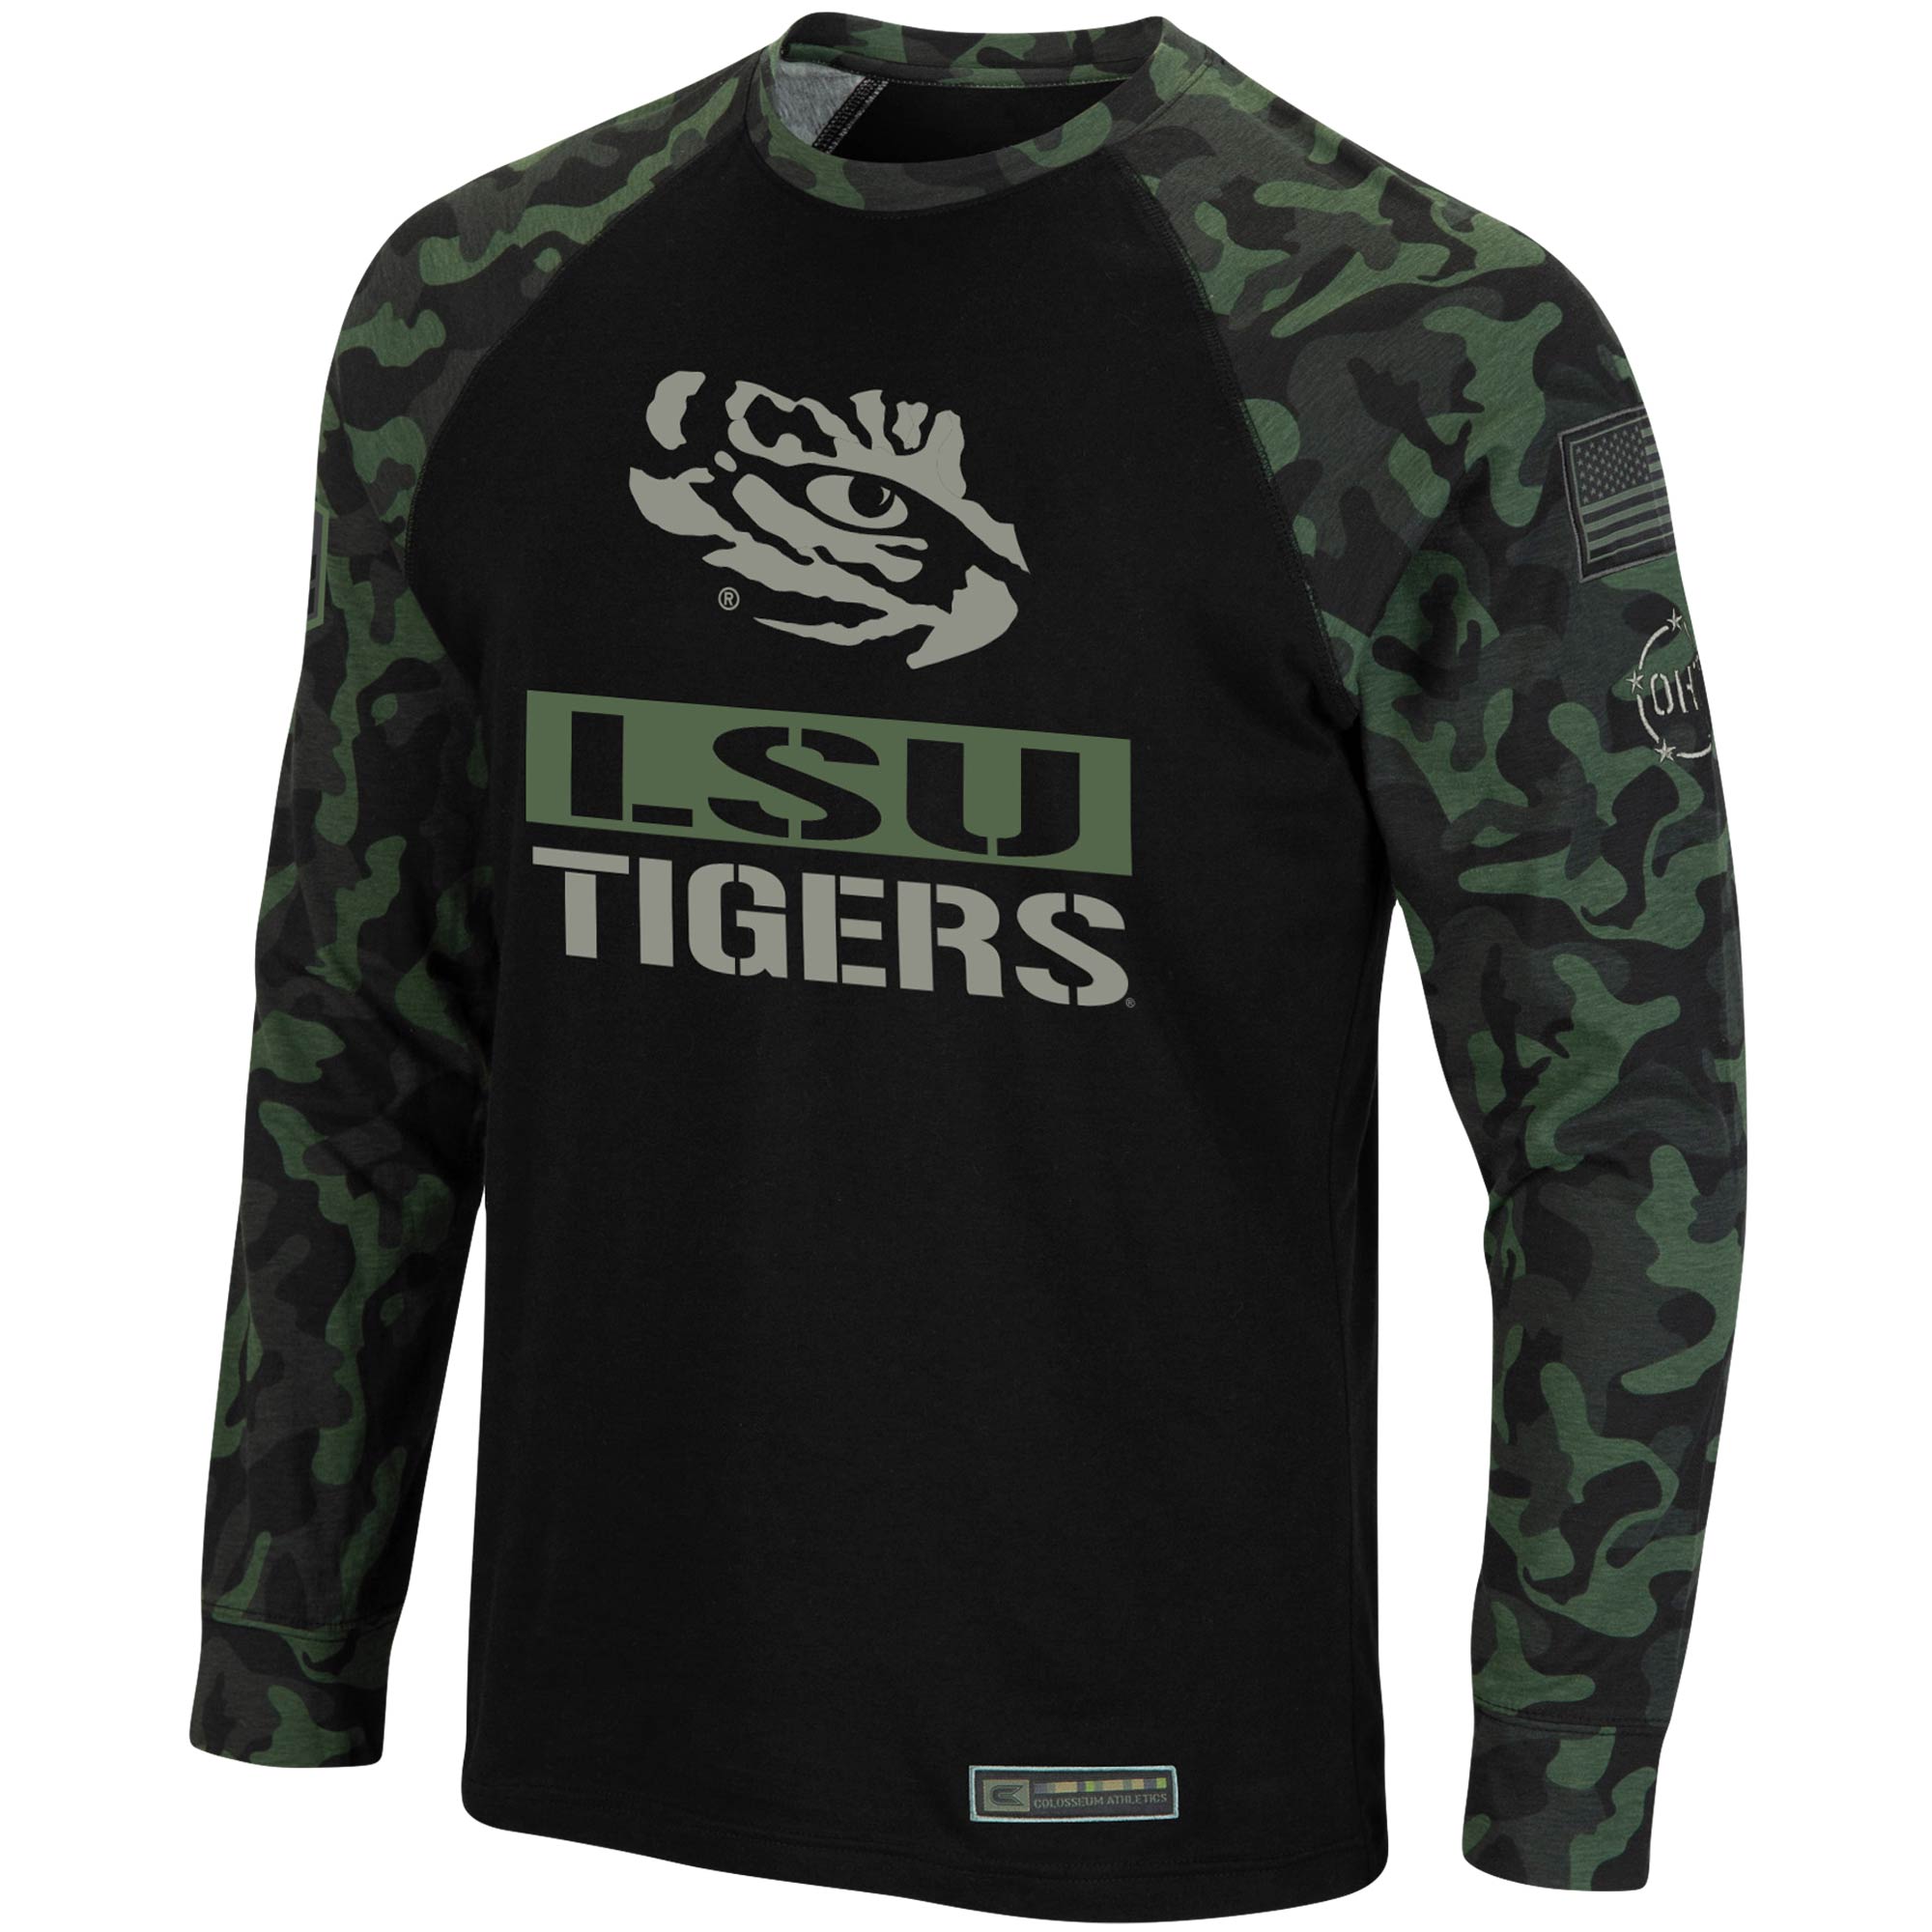 Men's Colosseum Black/Camo LSU Tigers OHT Military Appreciation Big & Tall Raglan Long Sleeve T-Shirt - image 2 of 4